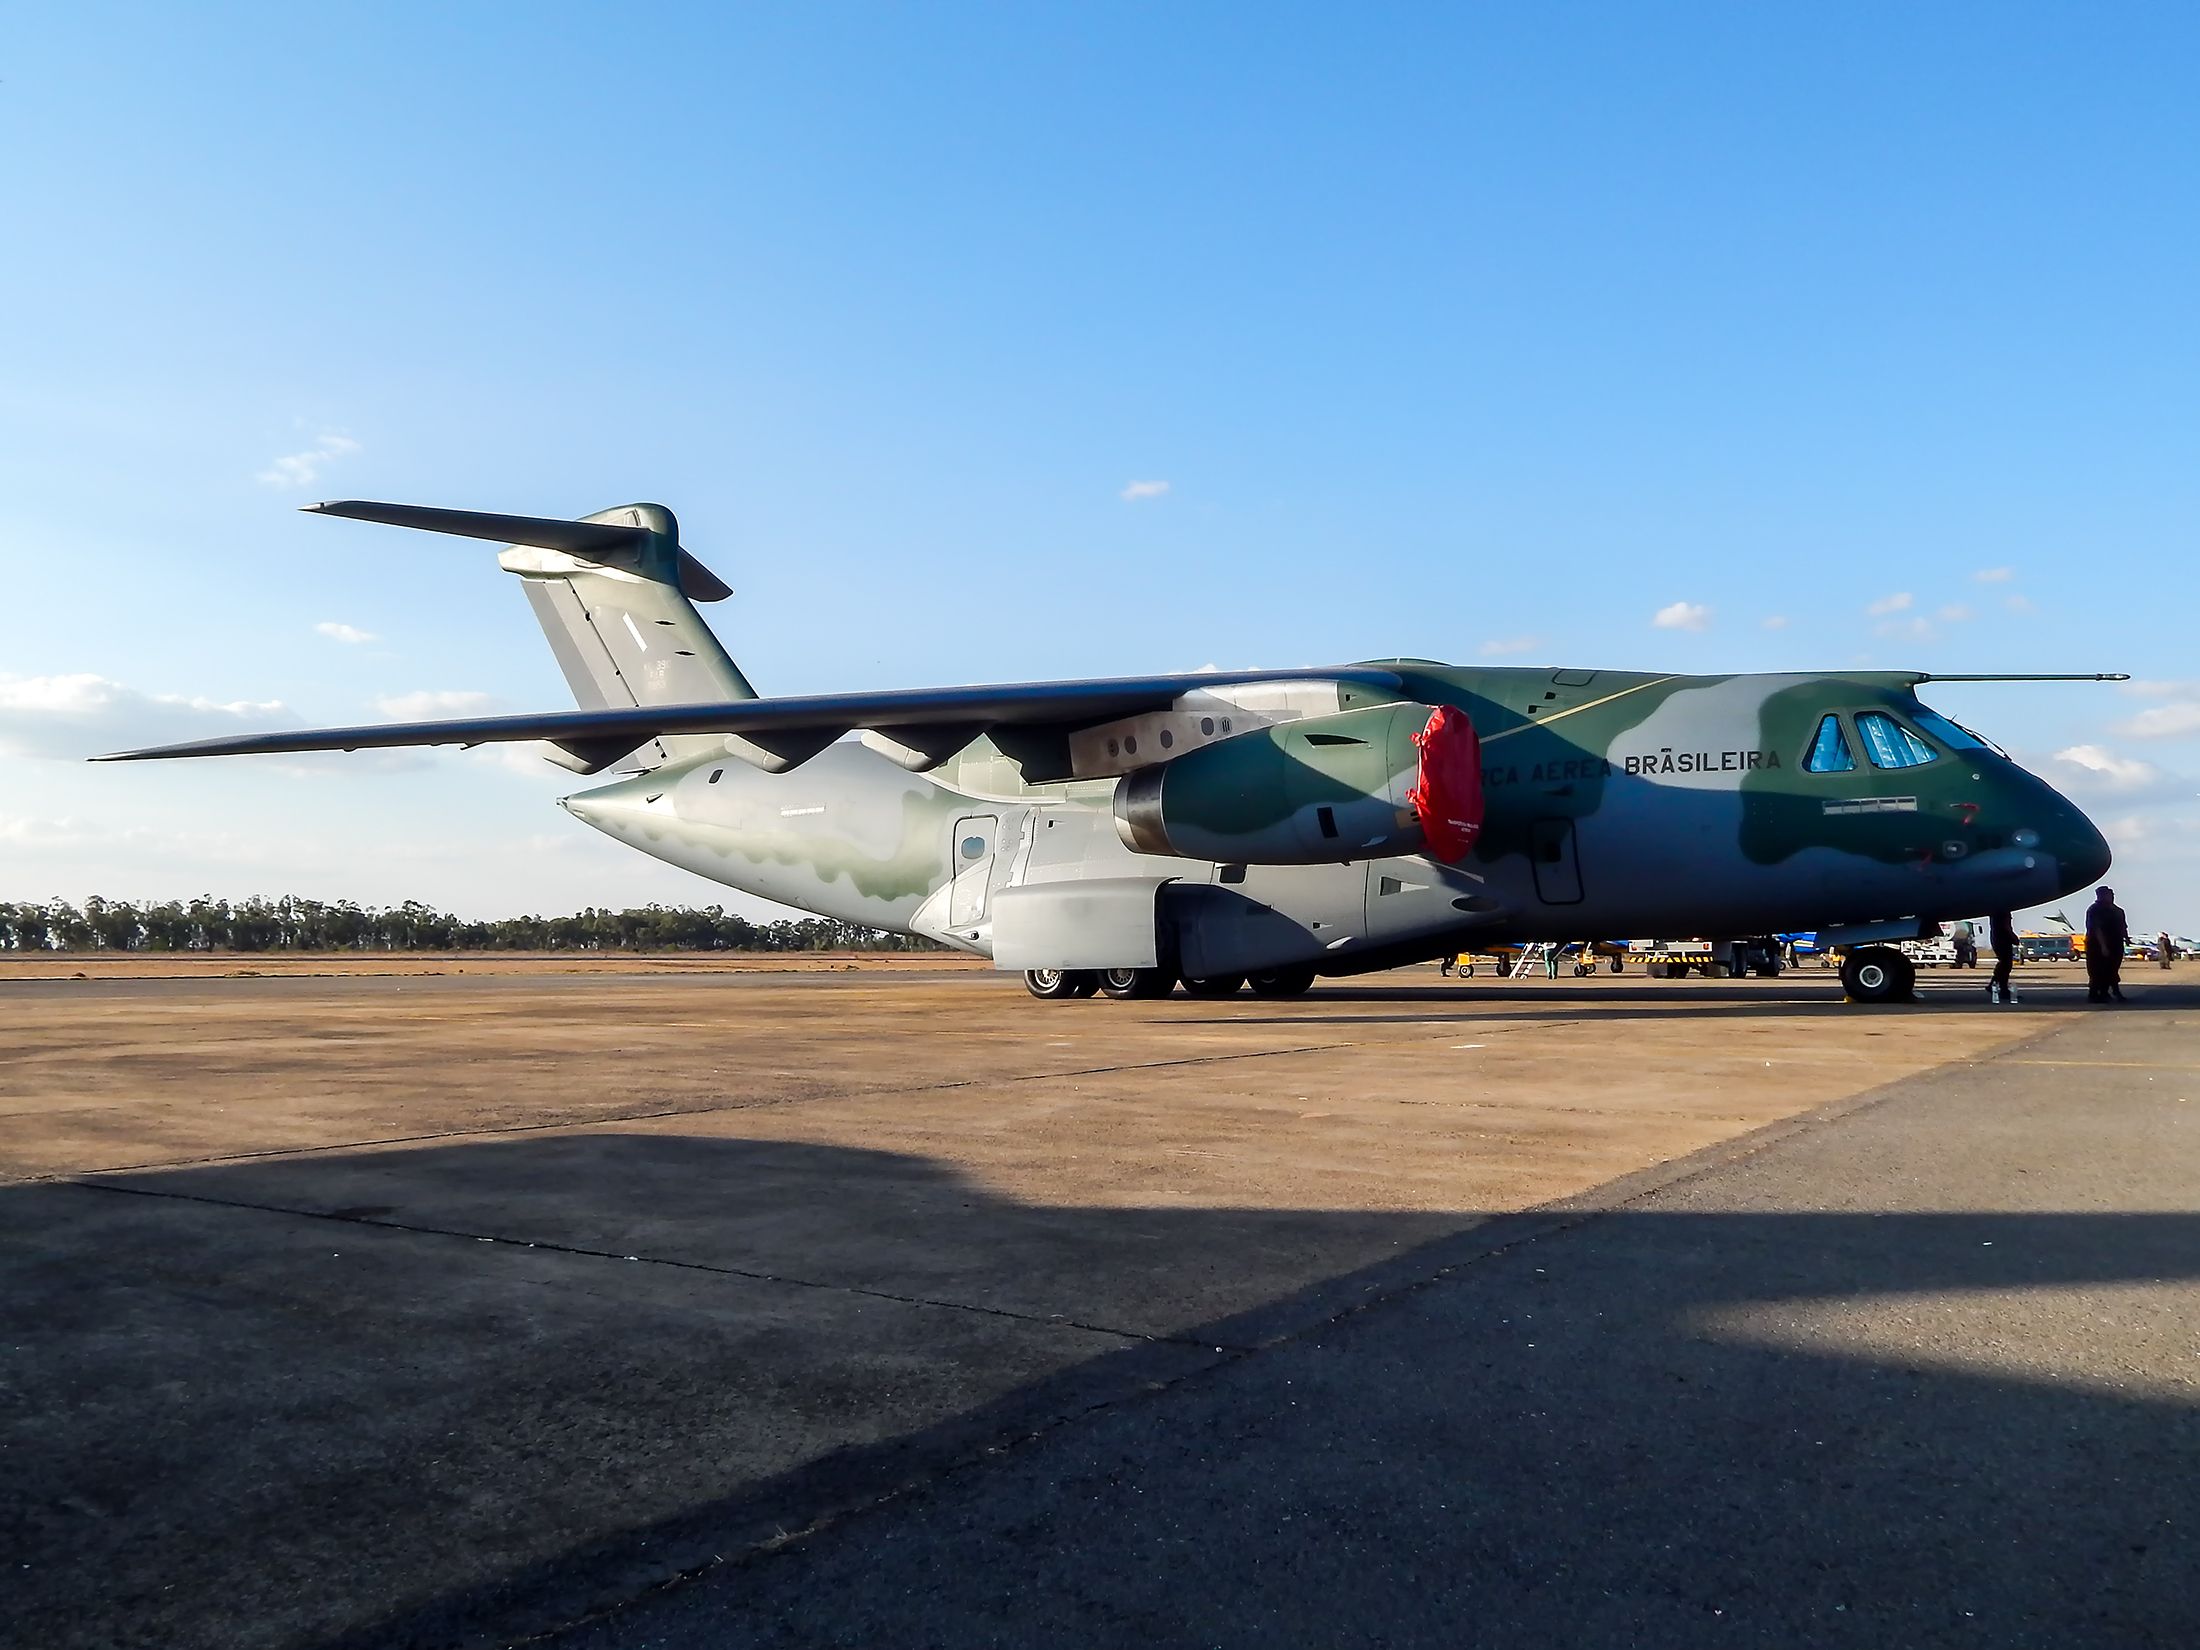 FAB (Força Aérea Brasileira) Embraer C-390 Millenium